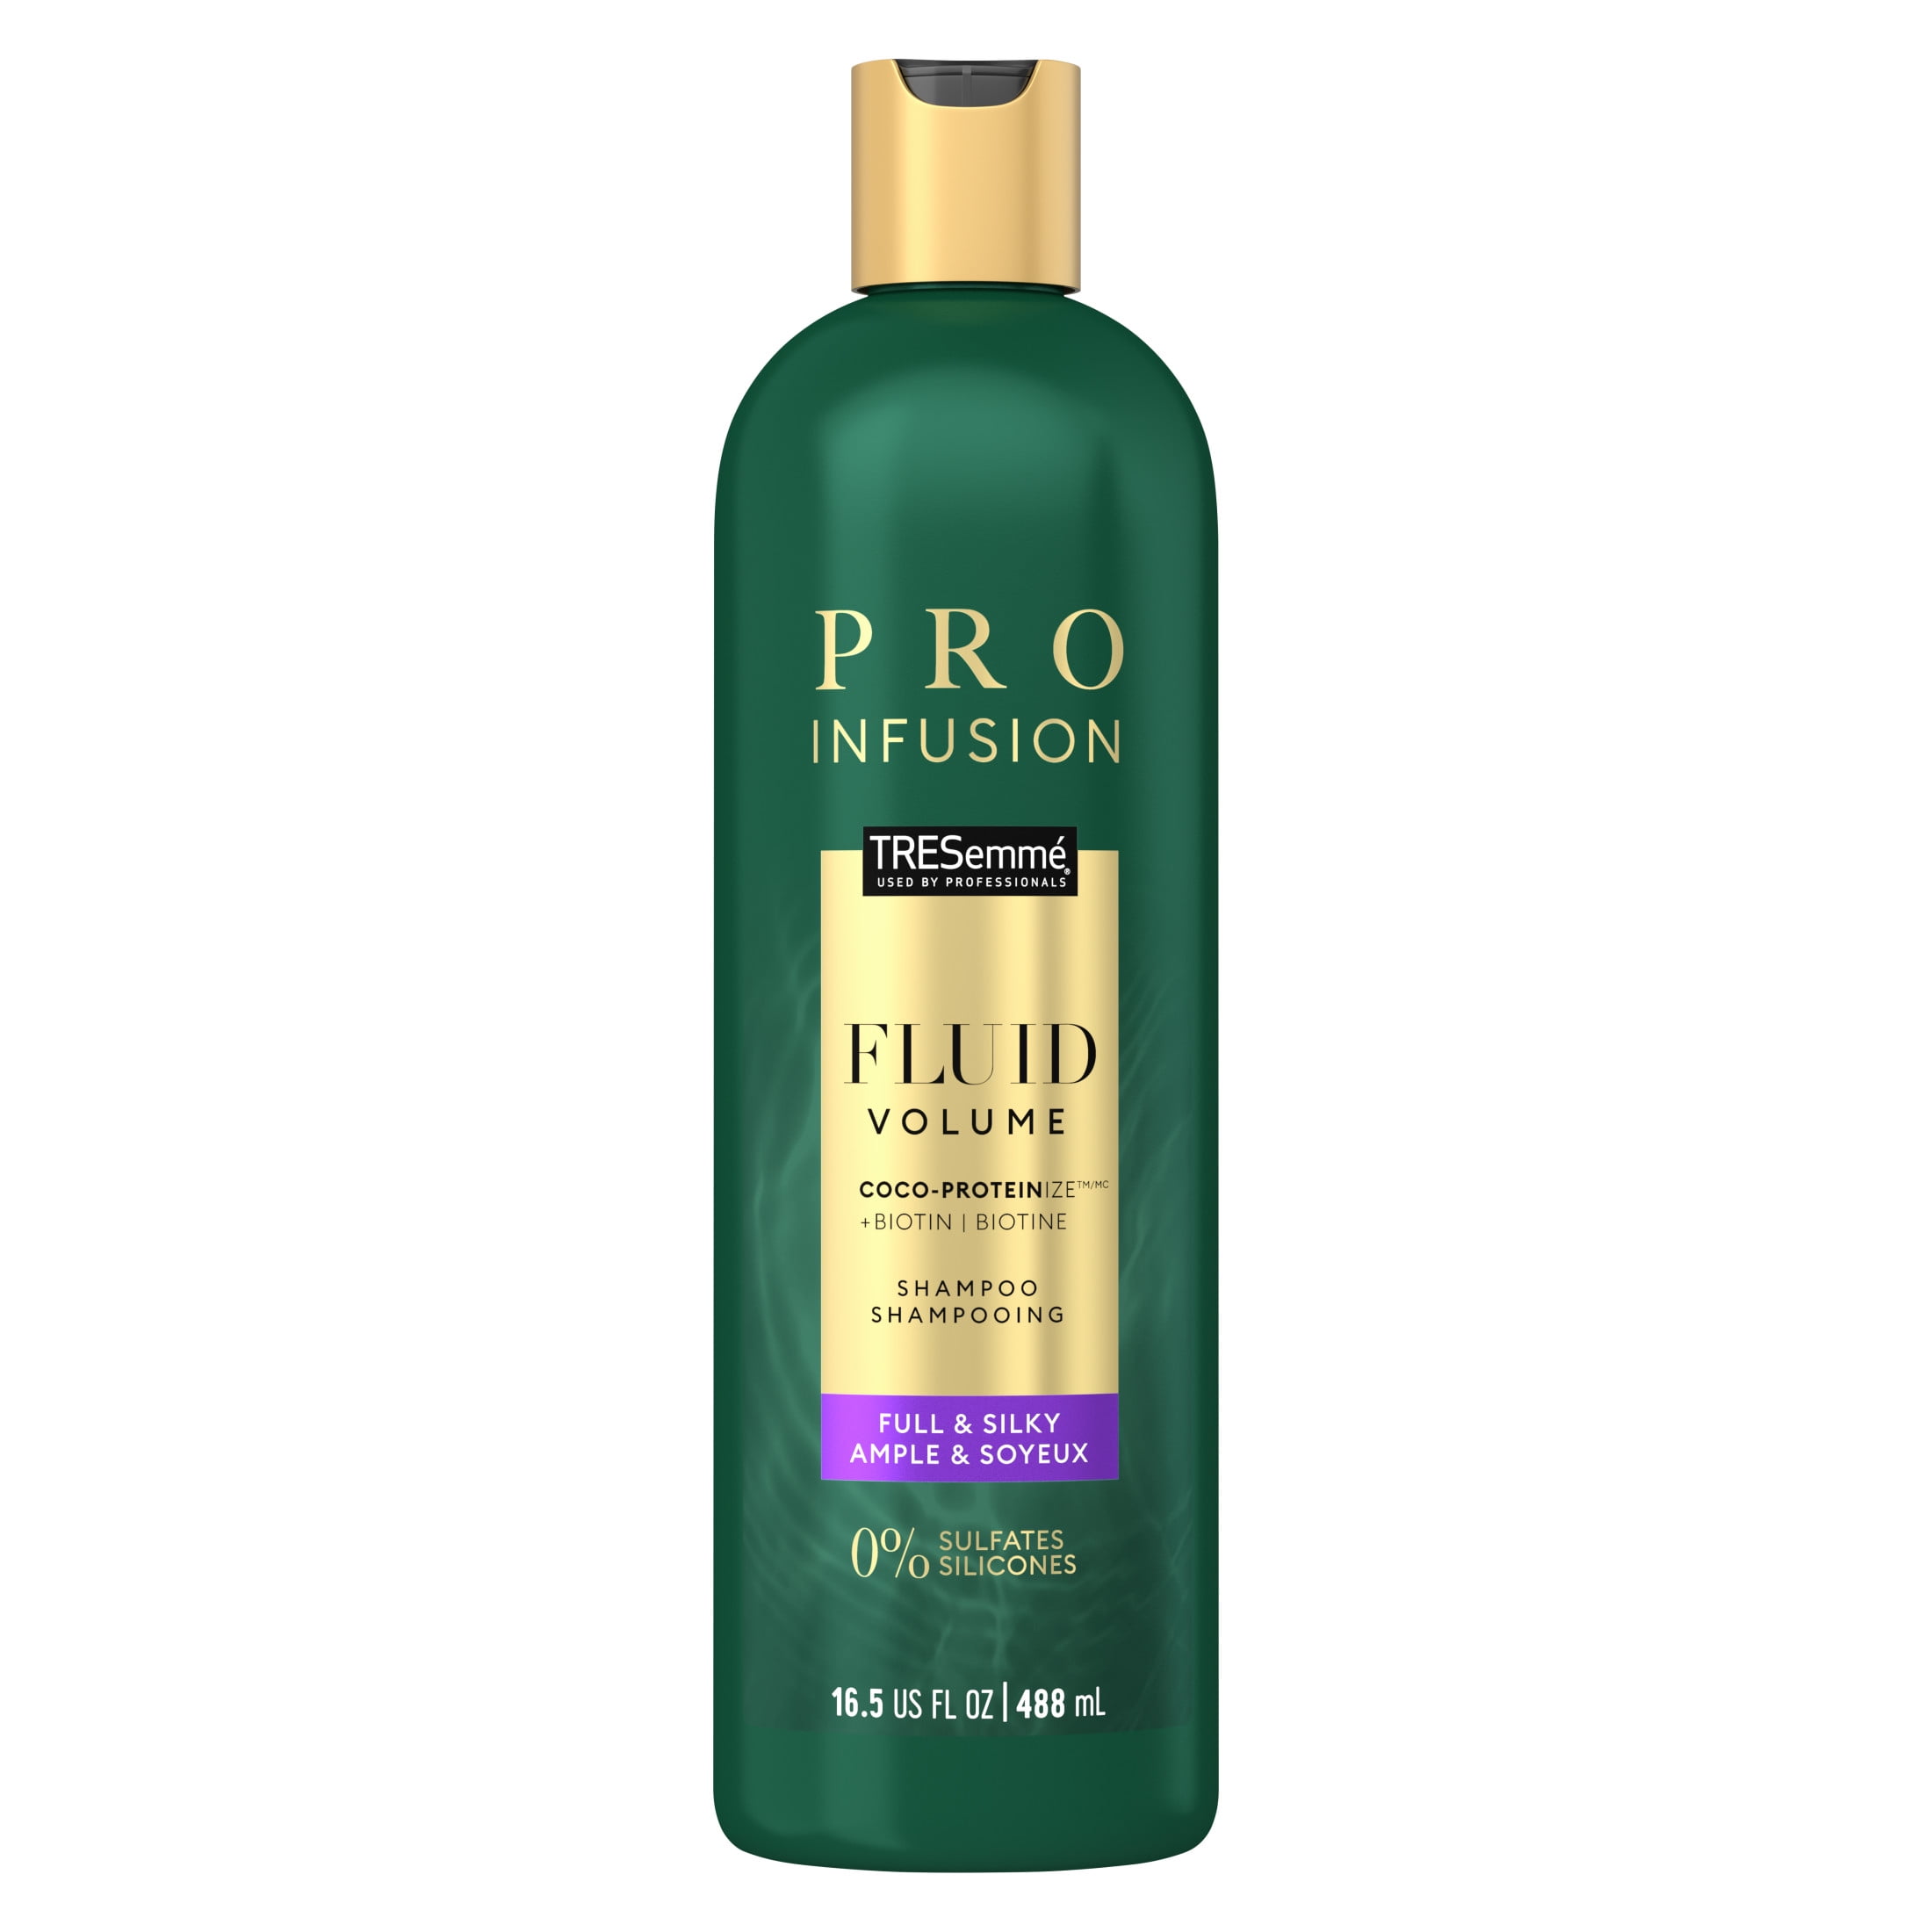 Tresemme Pro Infusion Fluid Volume Shampoo Cruelty-Free, 16.5 oz